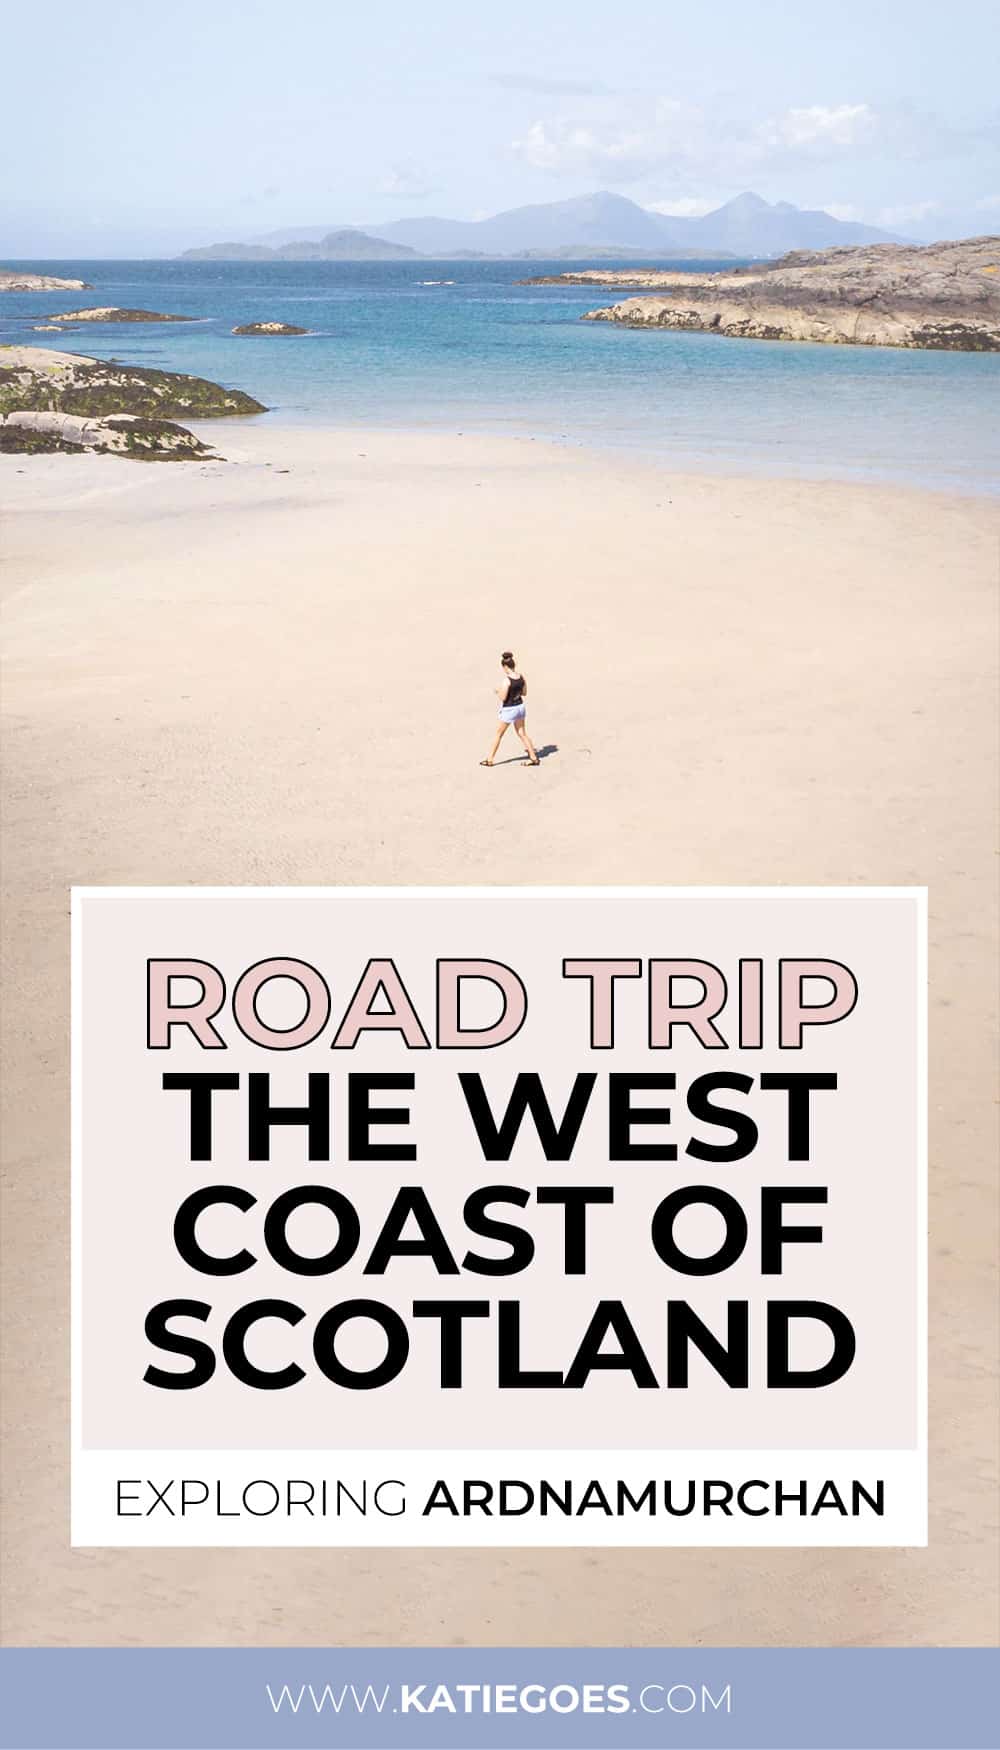 Exploring Ardnamurchan: Road Trip The West Coast of Scotland